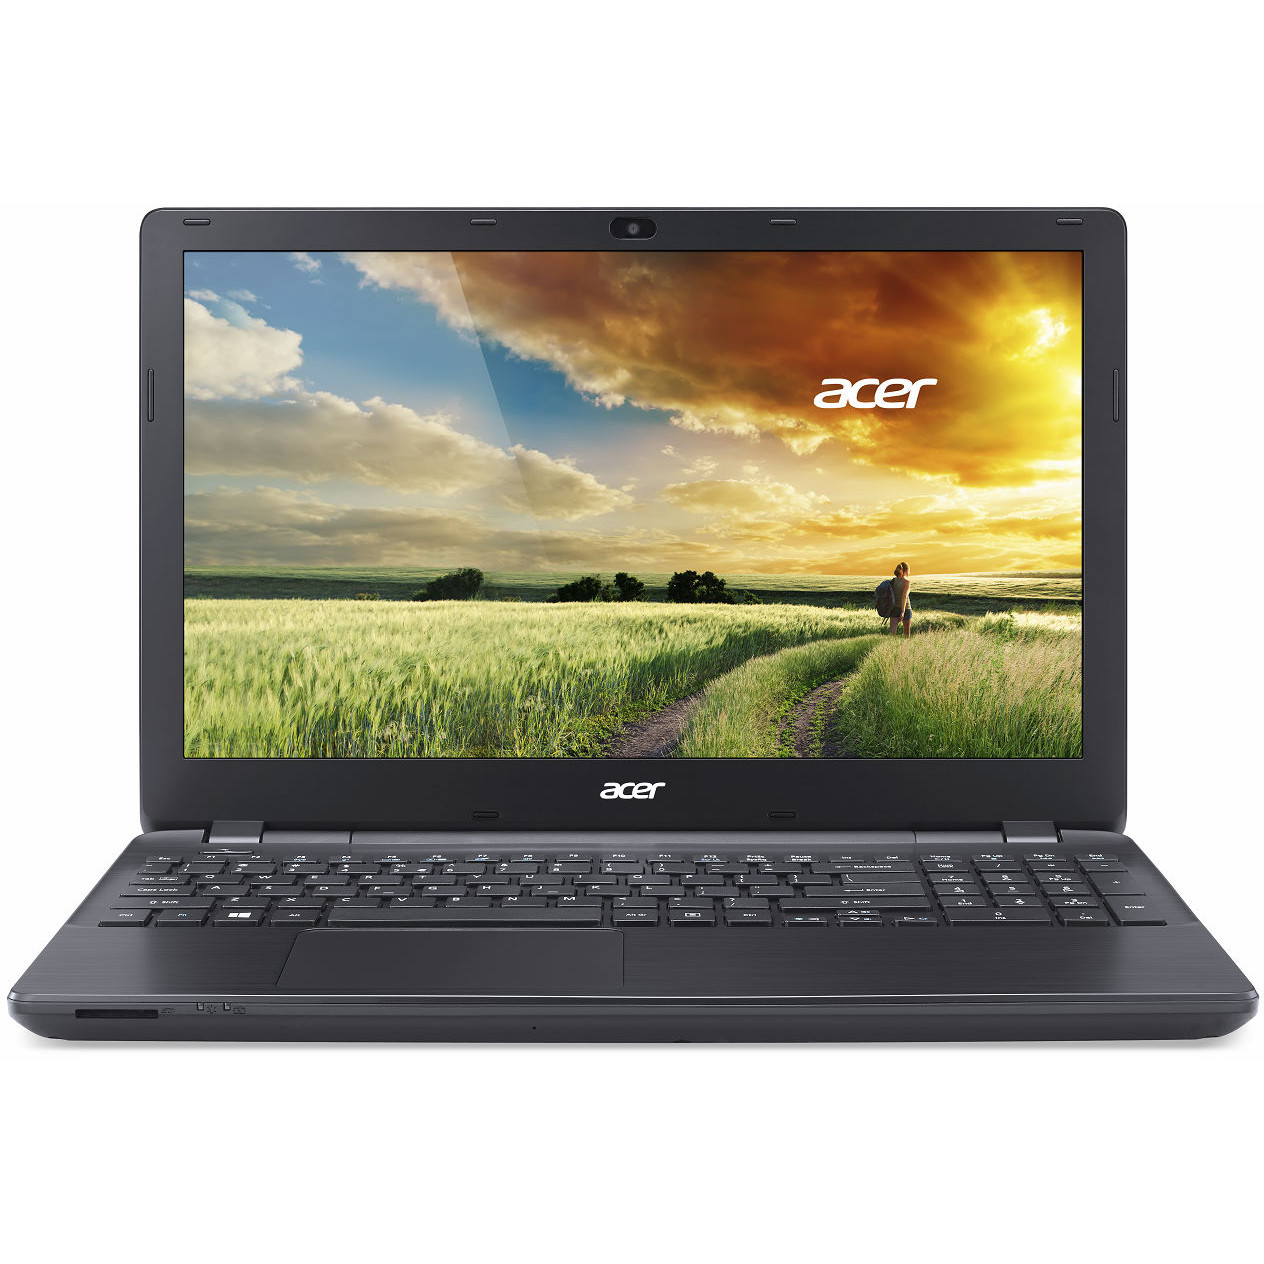 Laptop Acer E5G, Intel Core i3-4000M, 8GB DDR3, HDD 1TB, nVidia GeForce 840M 2GB, Linux